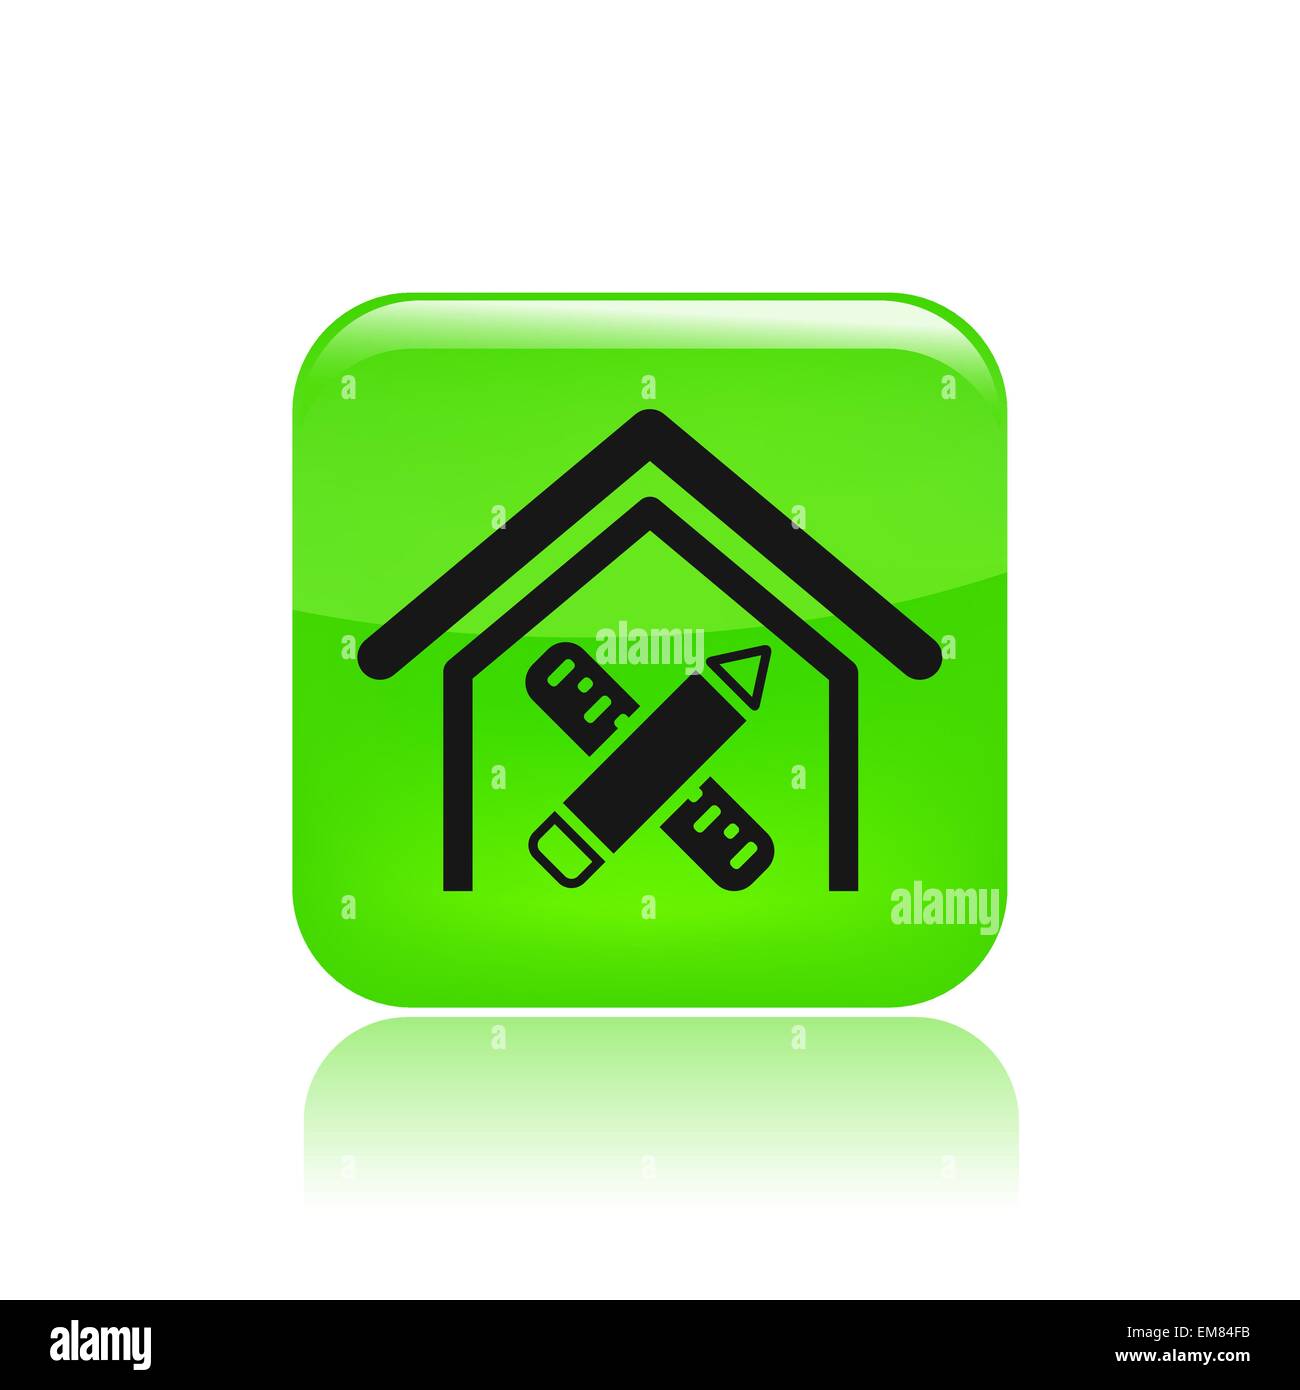 Vector illustration of single home design icon Stock Vector